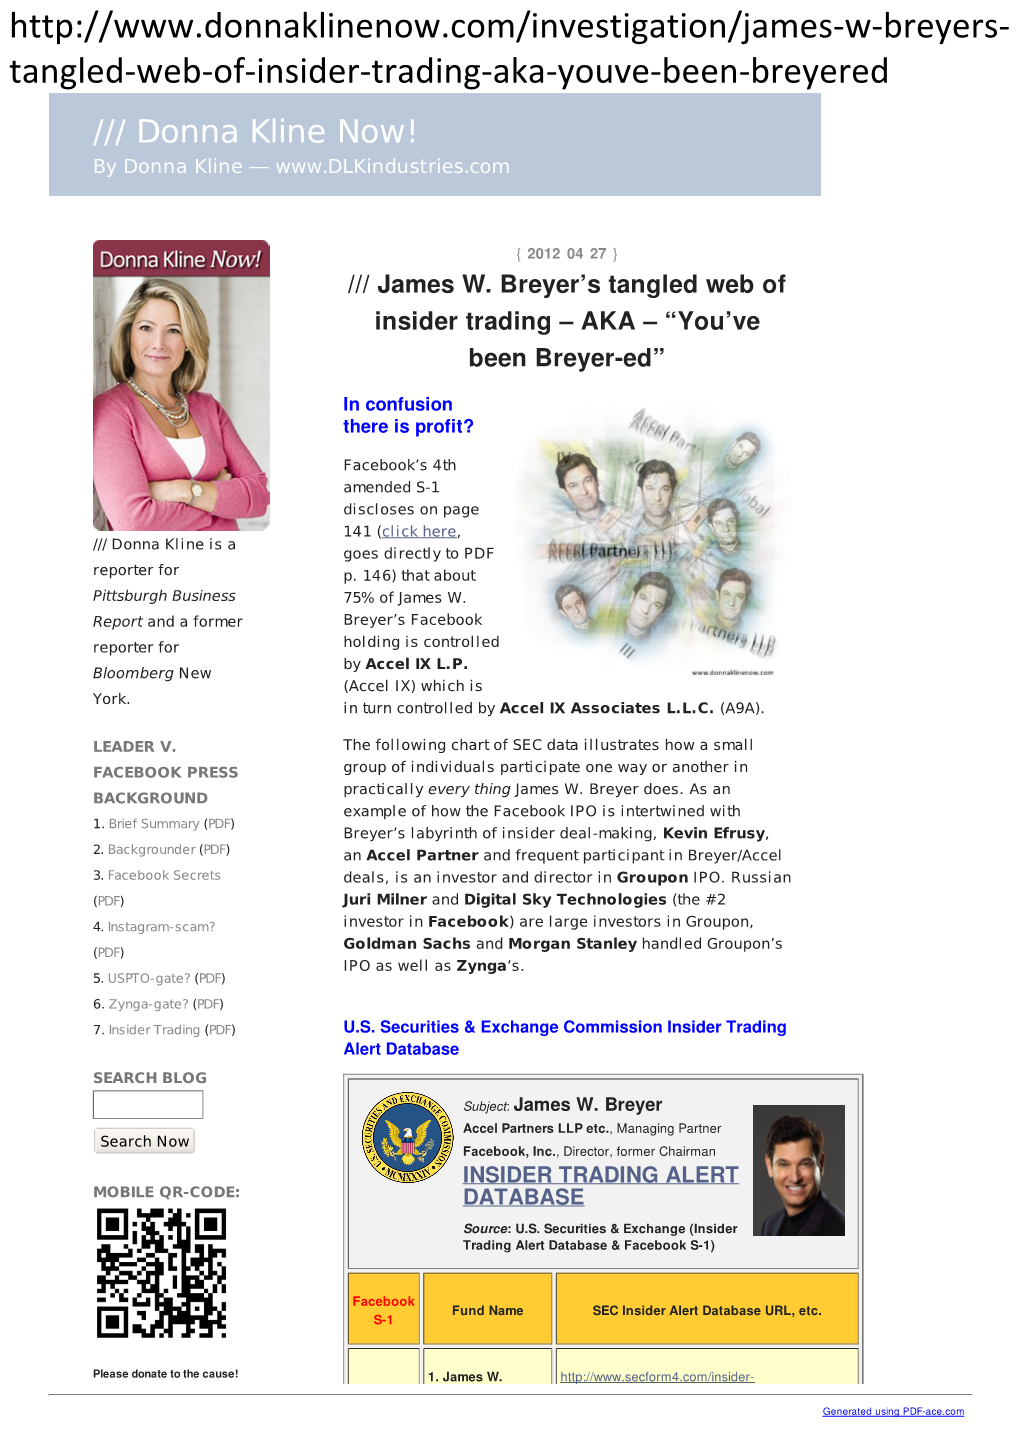 James W. Breyer / Accel Partners